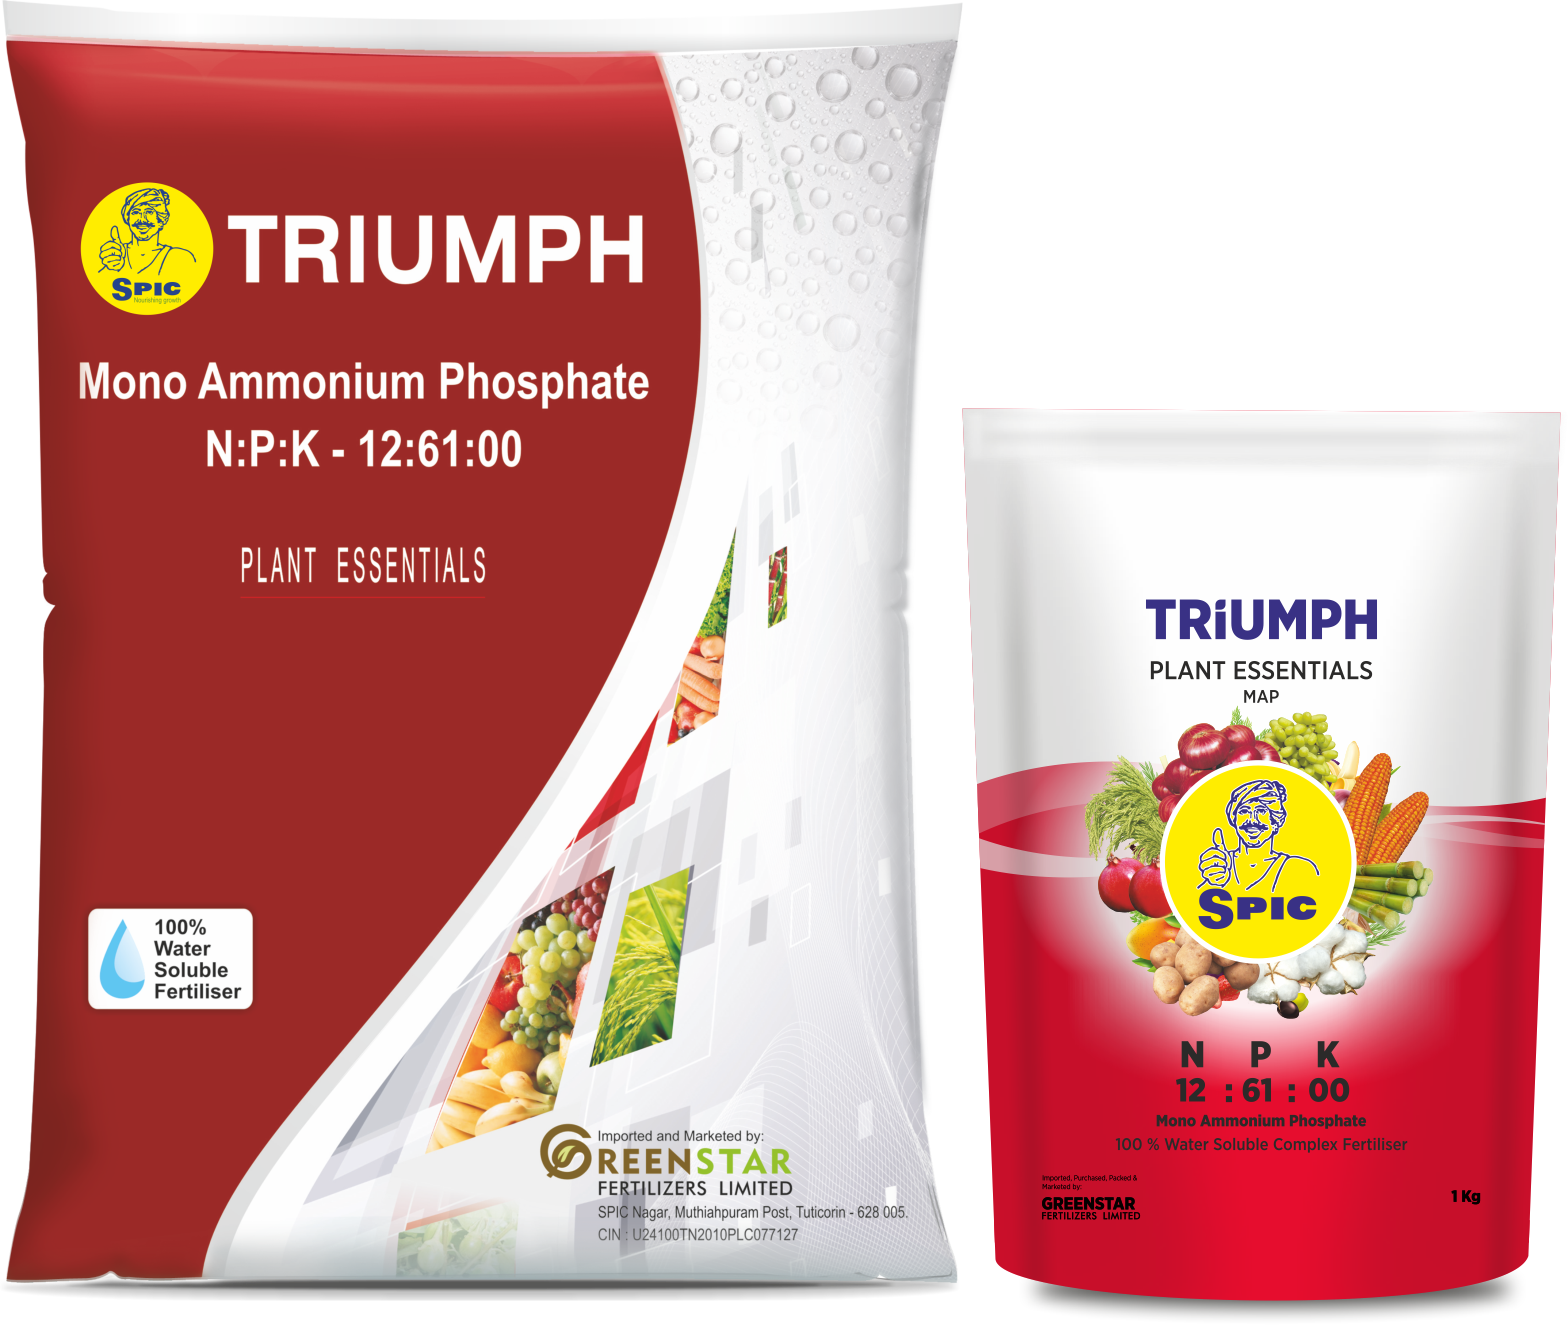 SPIC Triumph (NPK 12 61 00) Mono Ammonium Phosphate